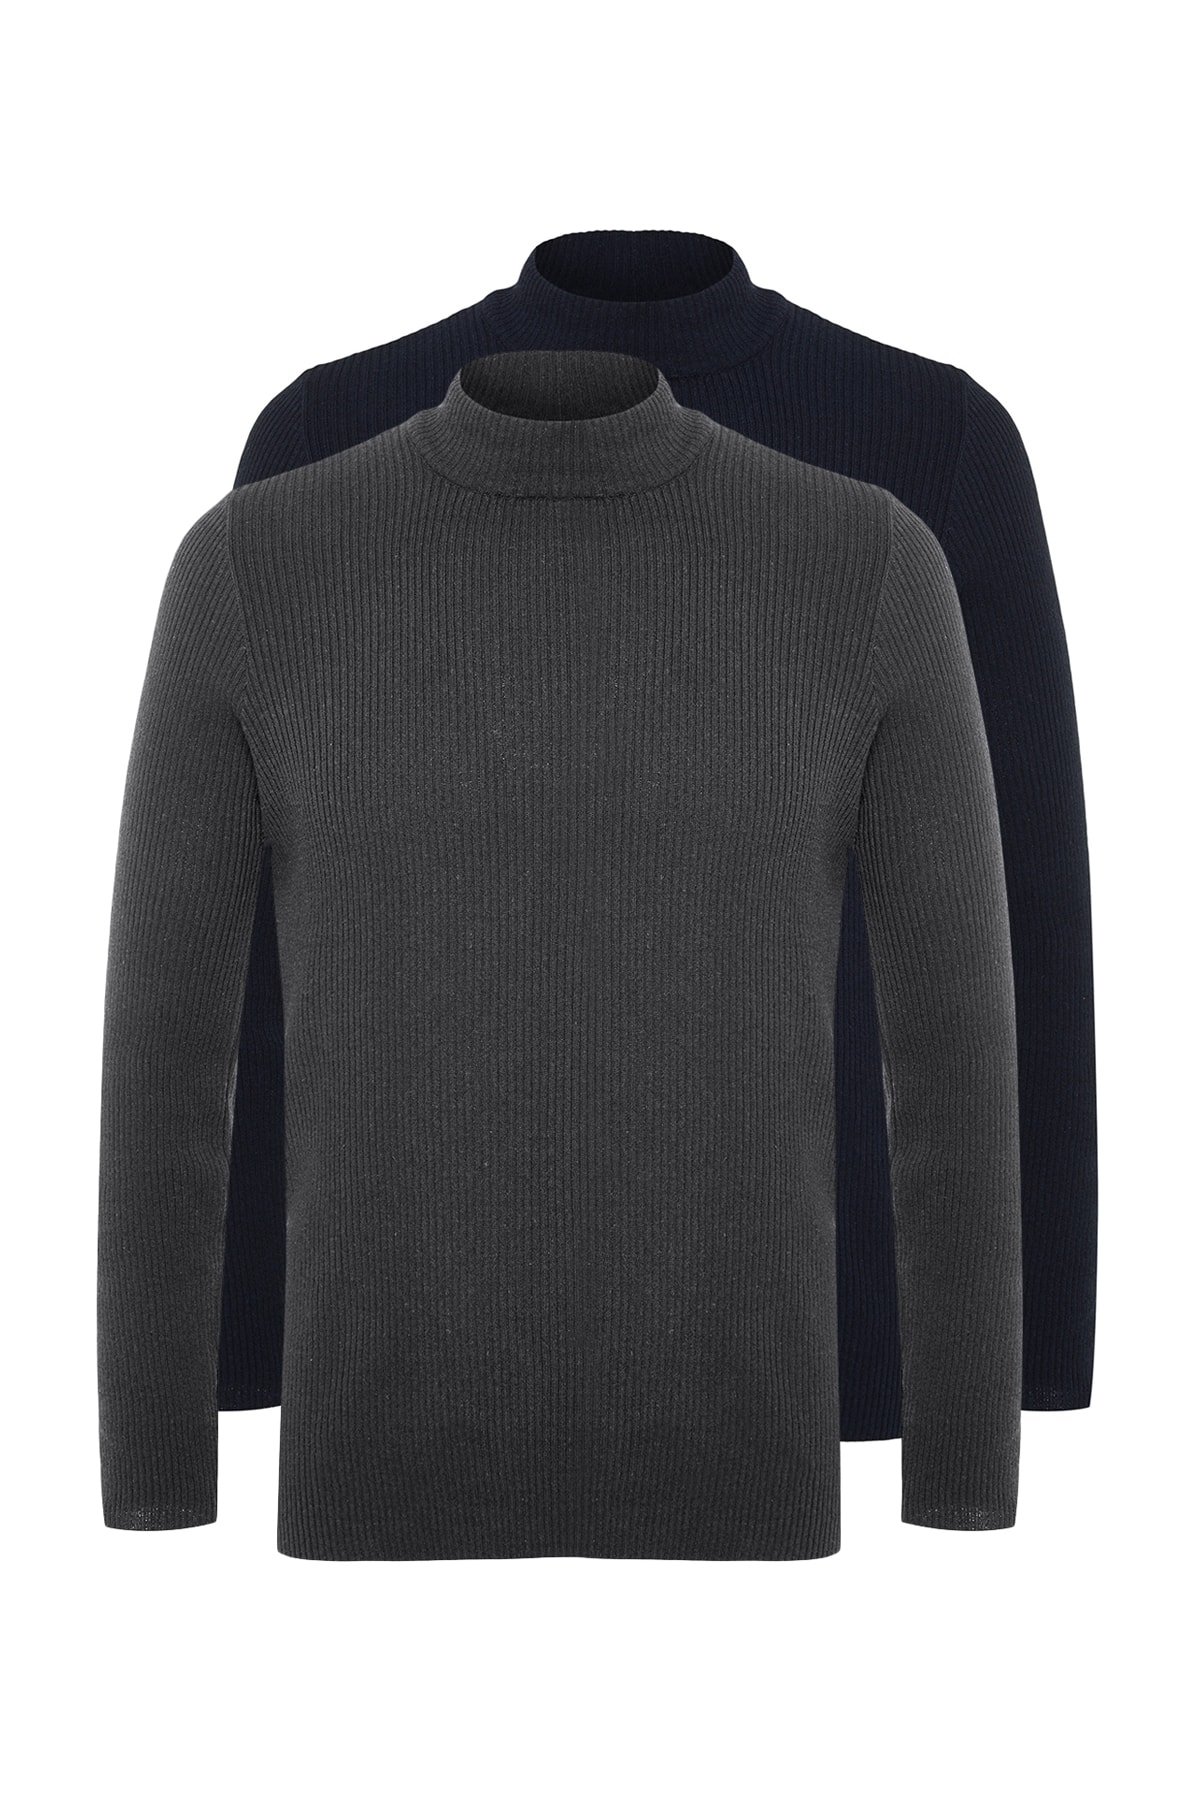 Trendyol Navy Blue-Anthracite Slim Fit Half Elastic Knit 2 Pack Knitwear Sweater